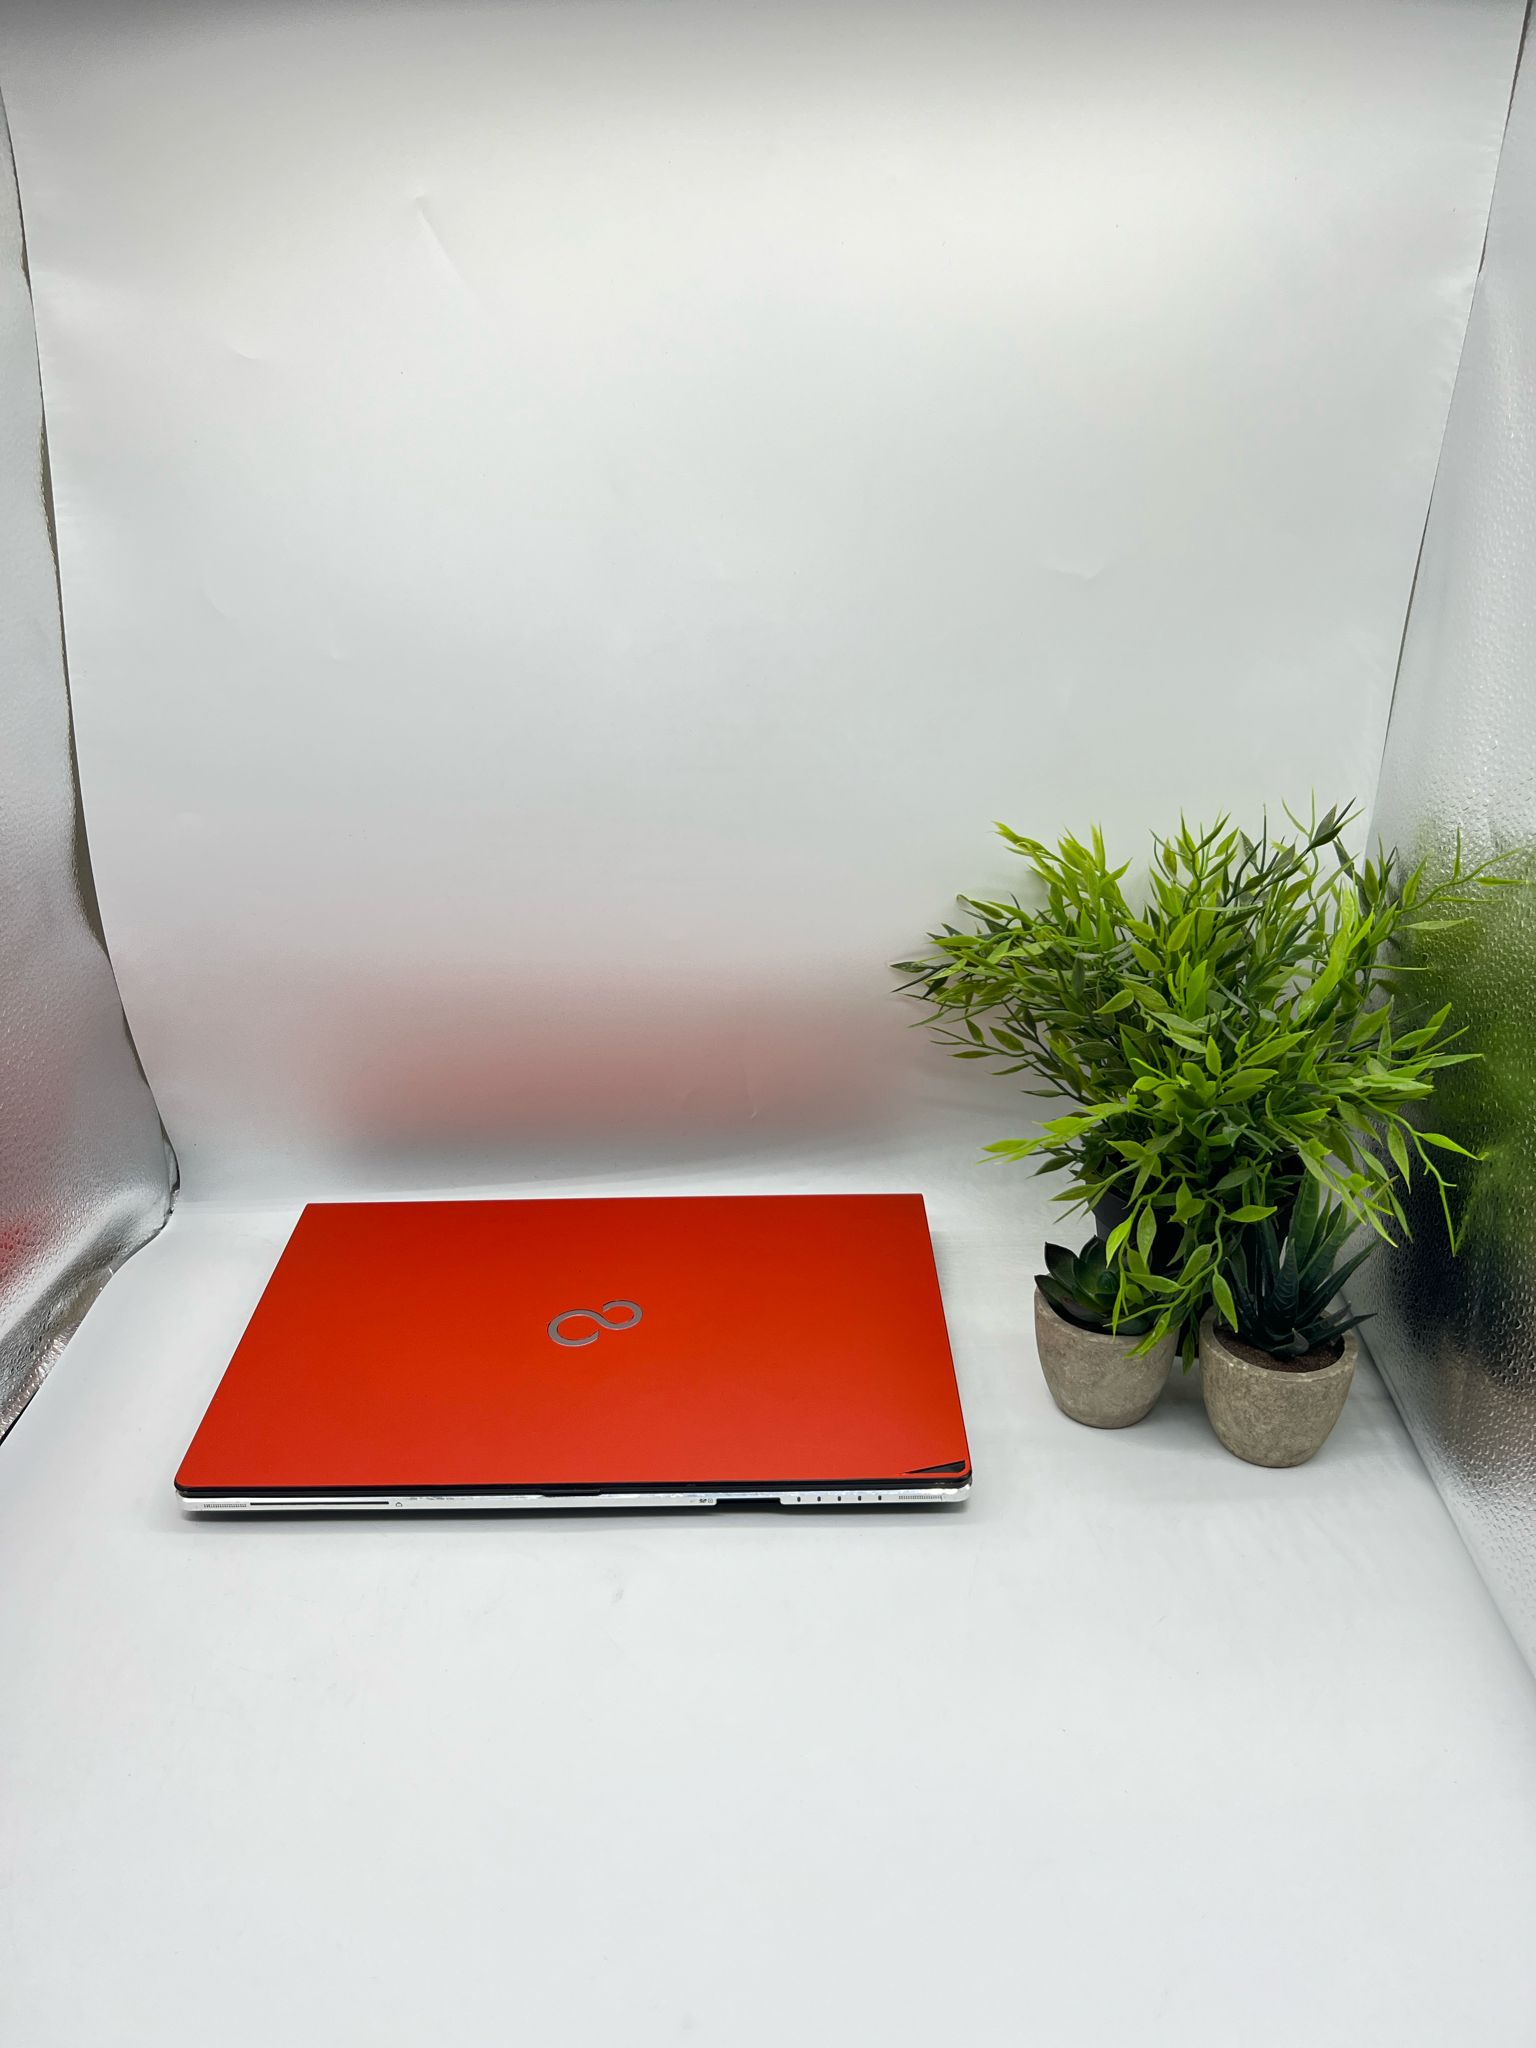 New windows 11 Fujitsu Laptop Coloured Slim Design Touchscreen Super Fast SSD Powerful intel i5 Quad